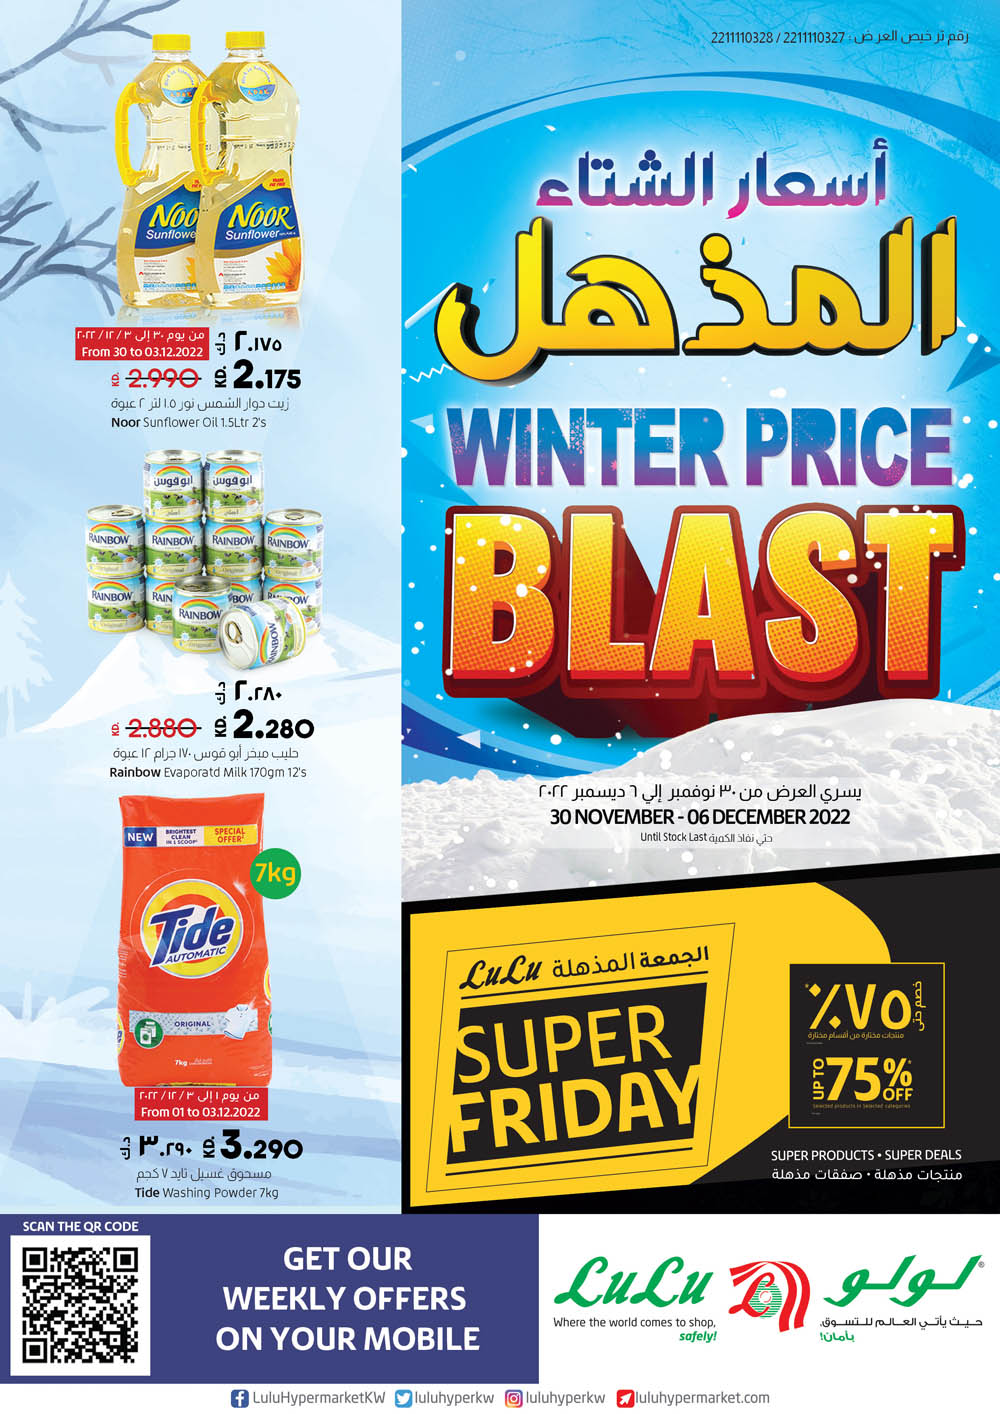 Lulu Hypermarket Winter Price Blasts December, iiQ8 Promotions 